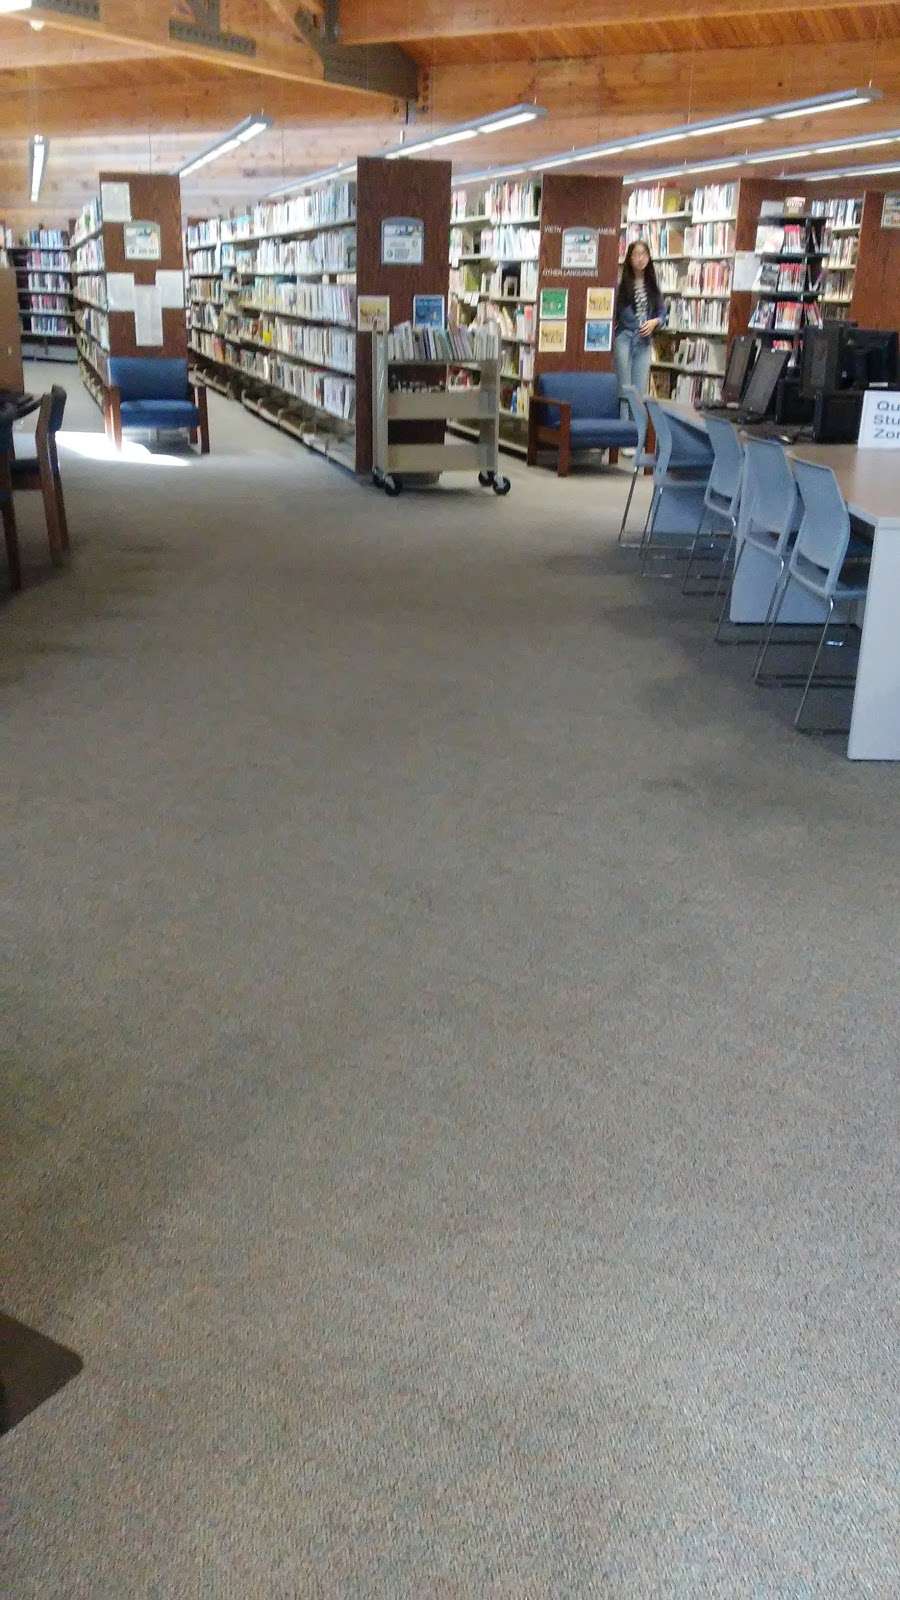 OC Library - University Park Regional Branch | 4512, University Park Library, Sandburg Way, Irvine, CA 92612 | Phone: (949) 786-4001